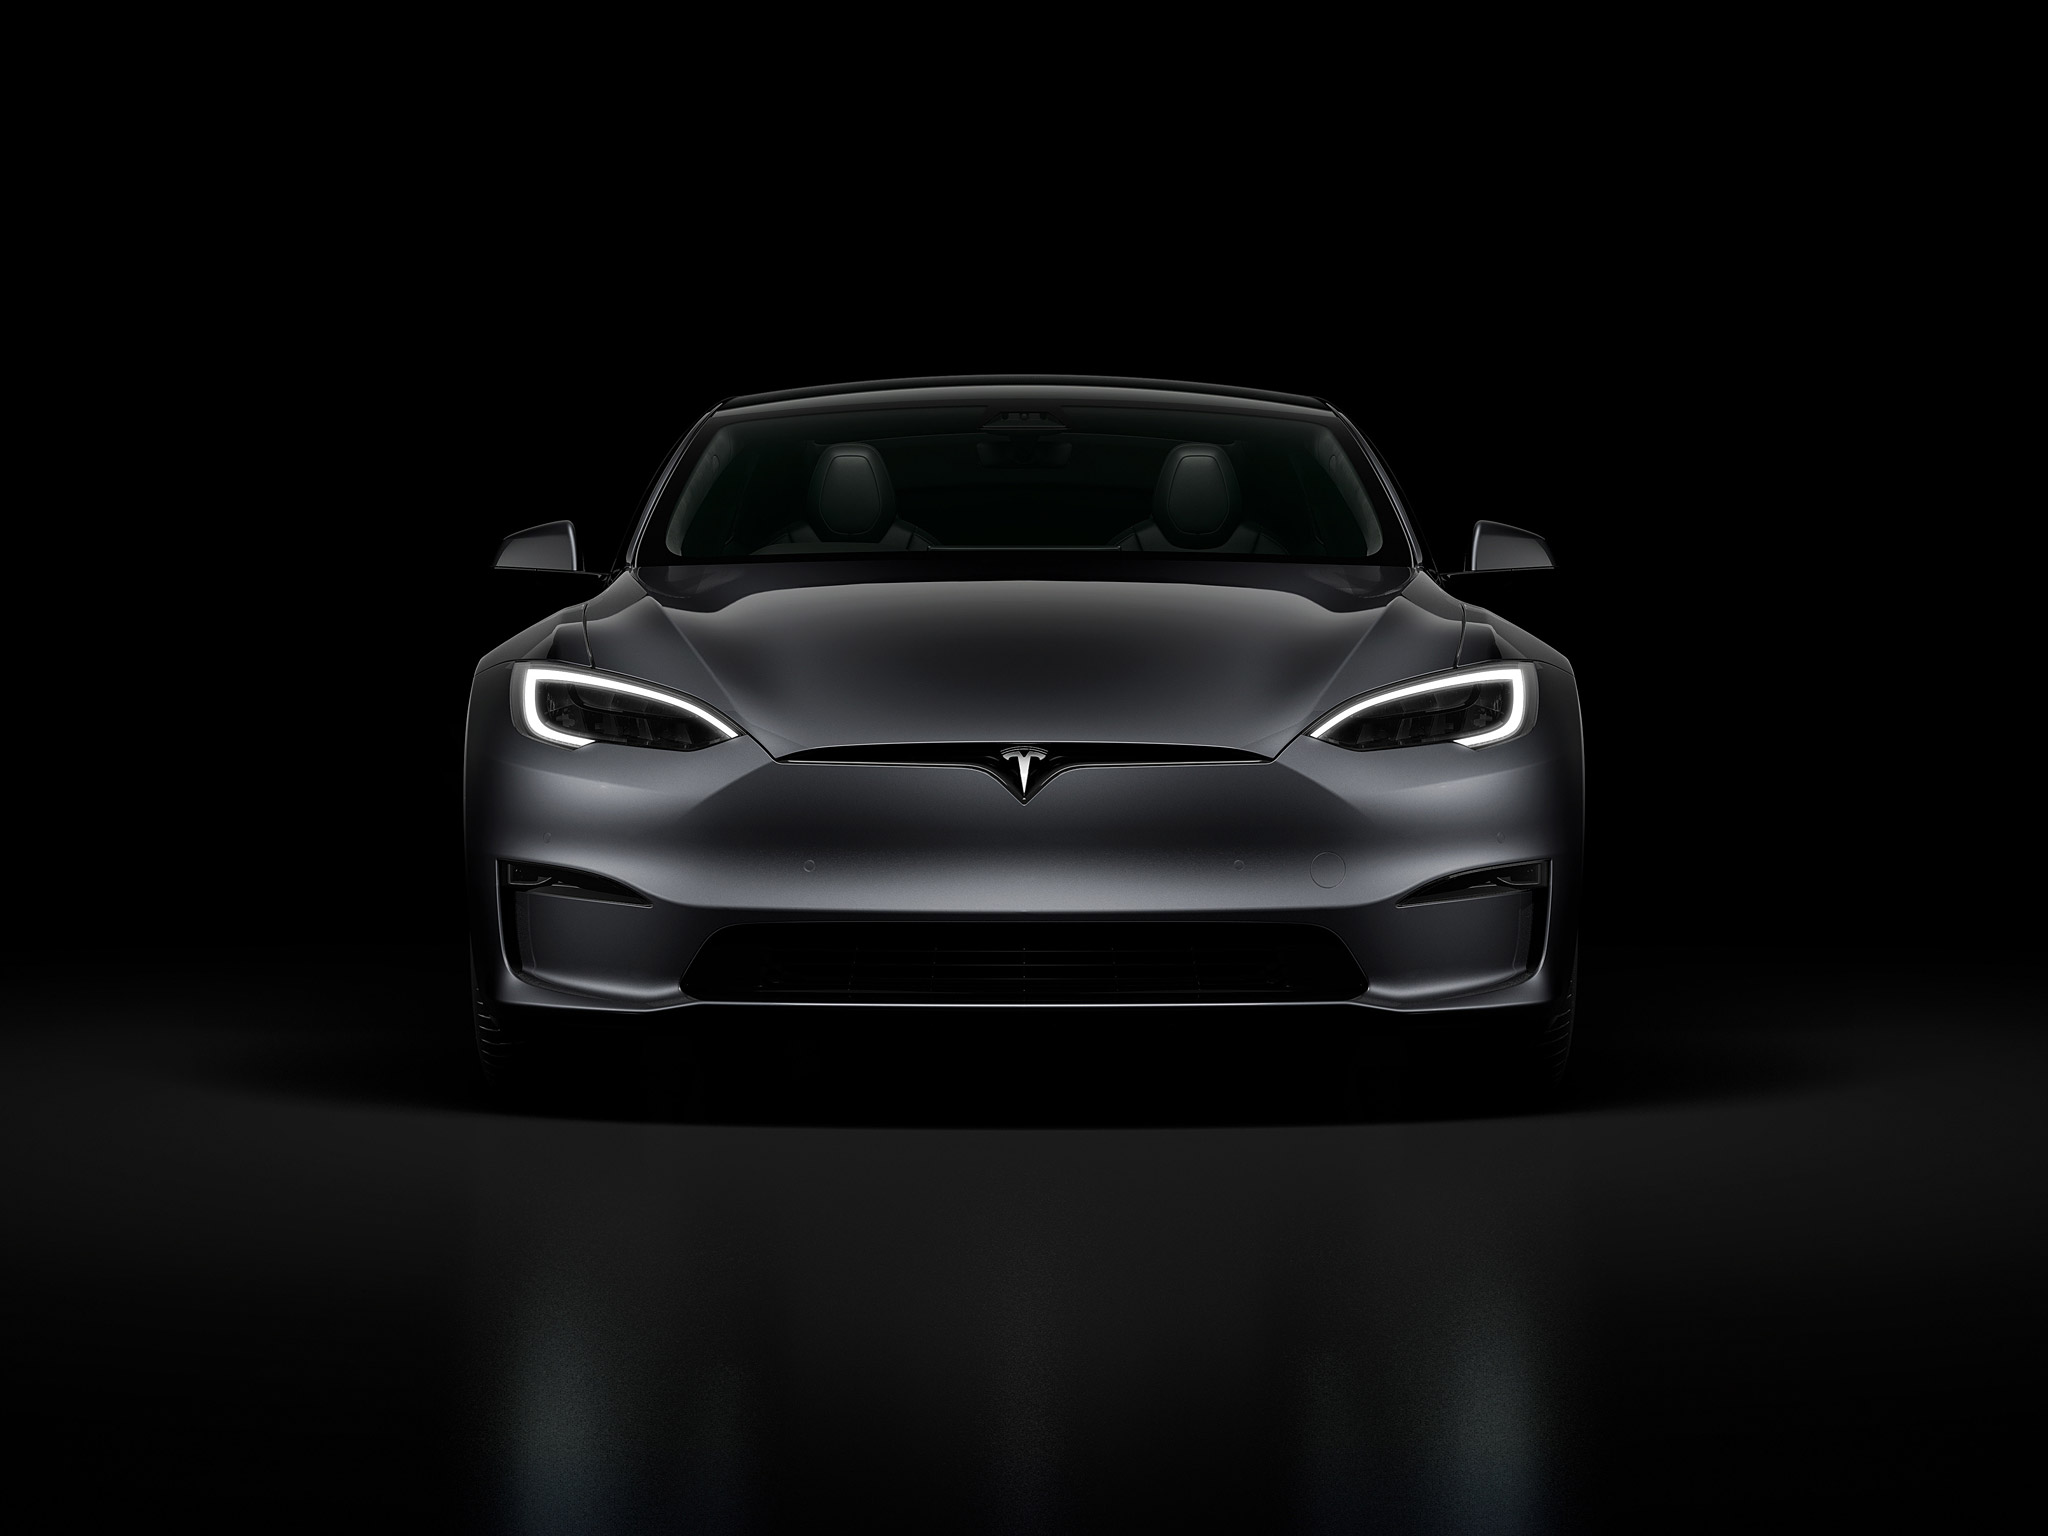  2021 Tesla Model S Wallpaper.